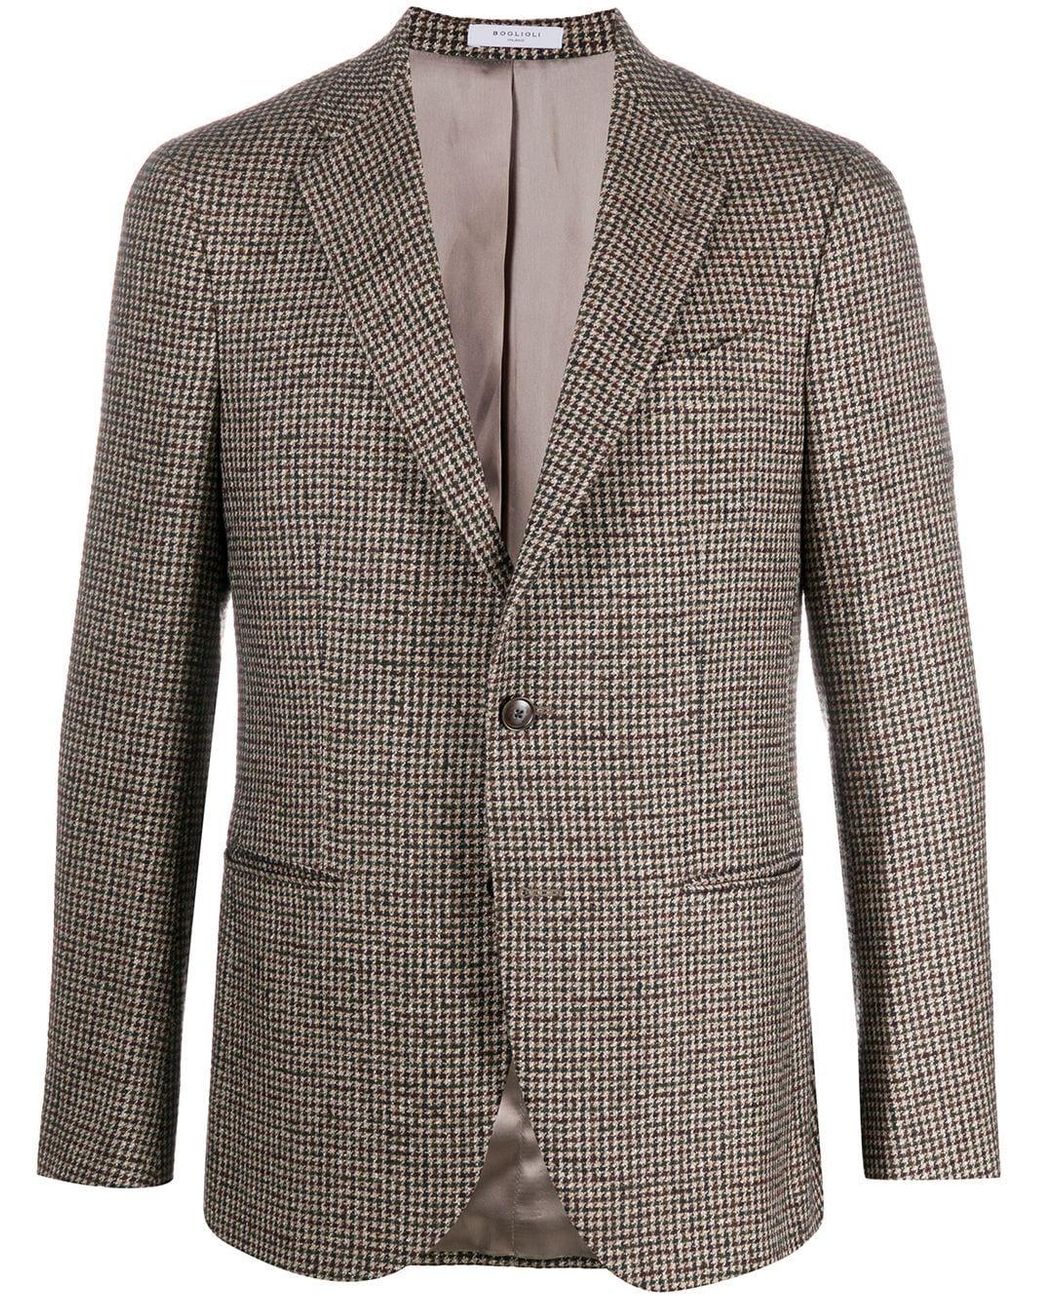 Boglioli Wool Milano Houndstooth Pattern Blazer in Brown for Men - Lyst